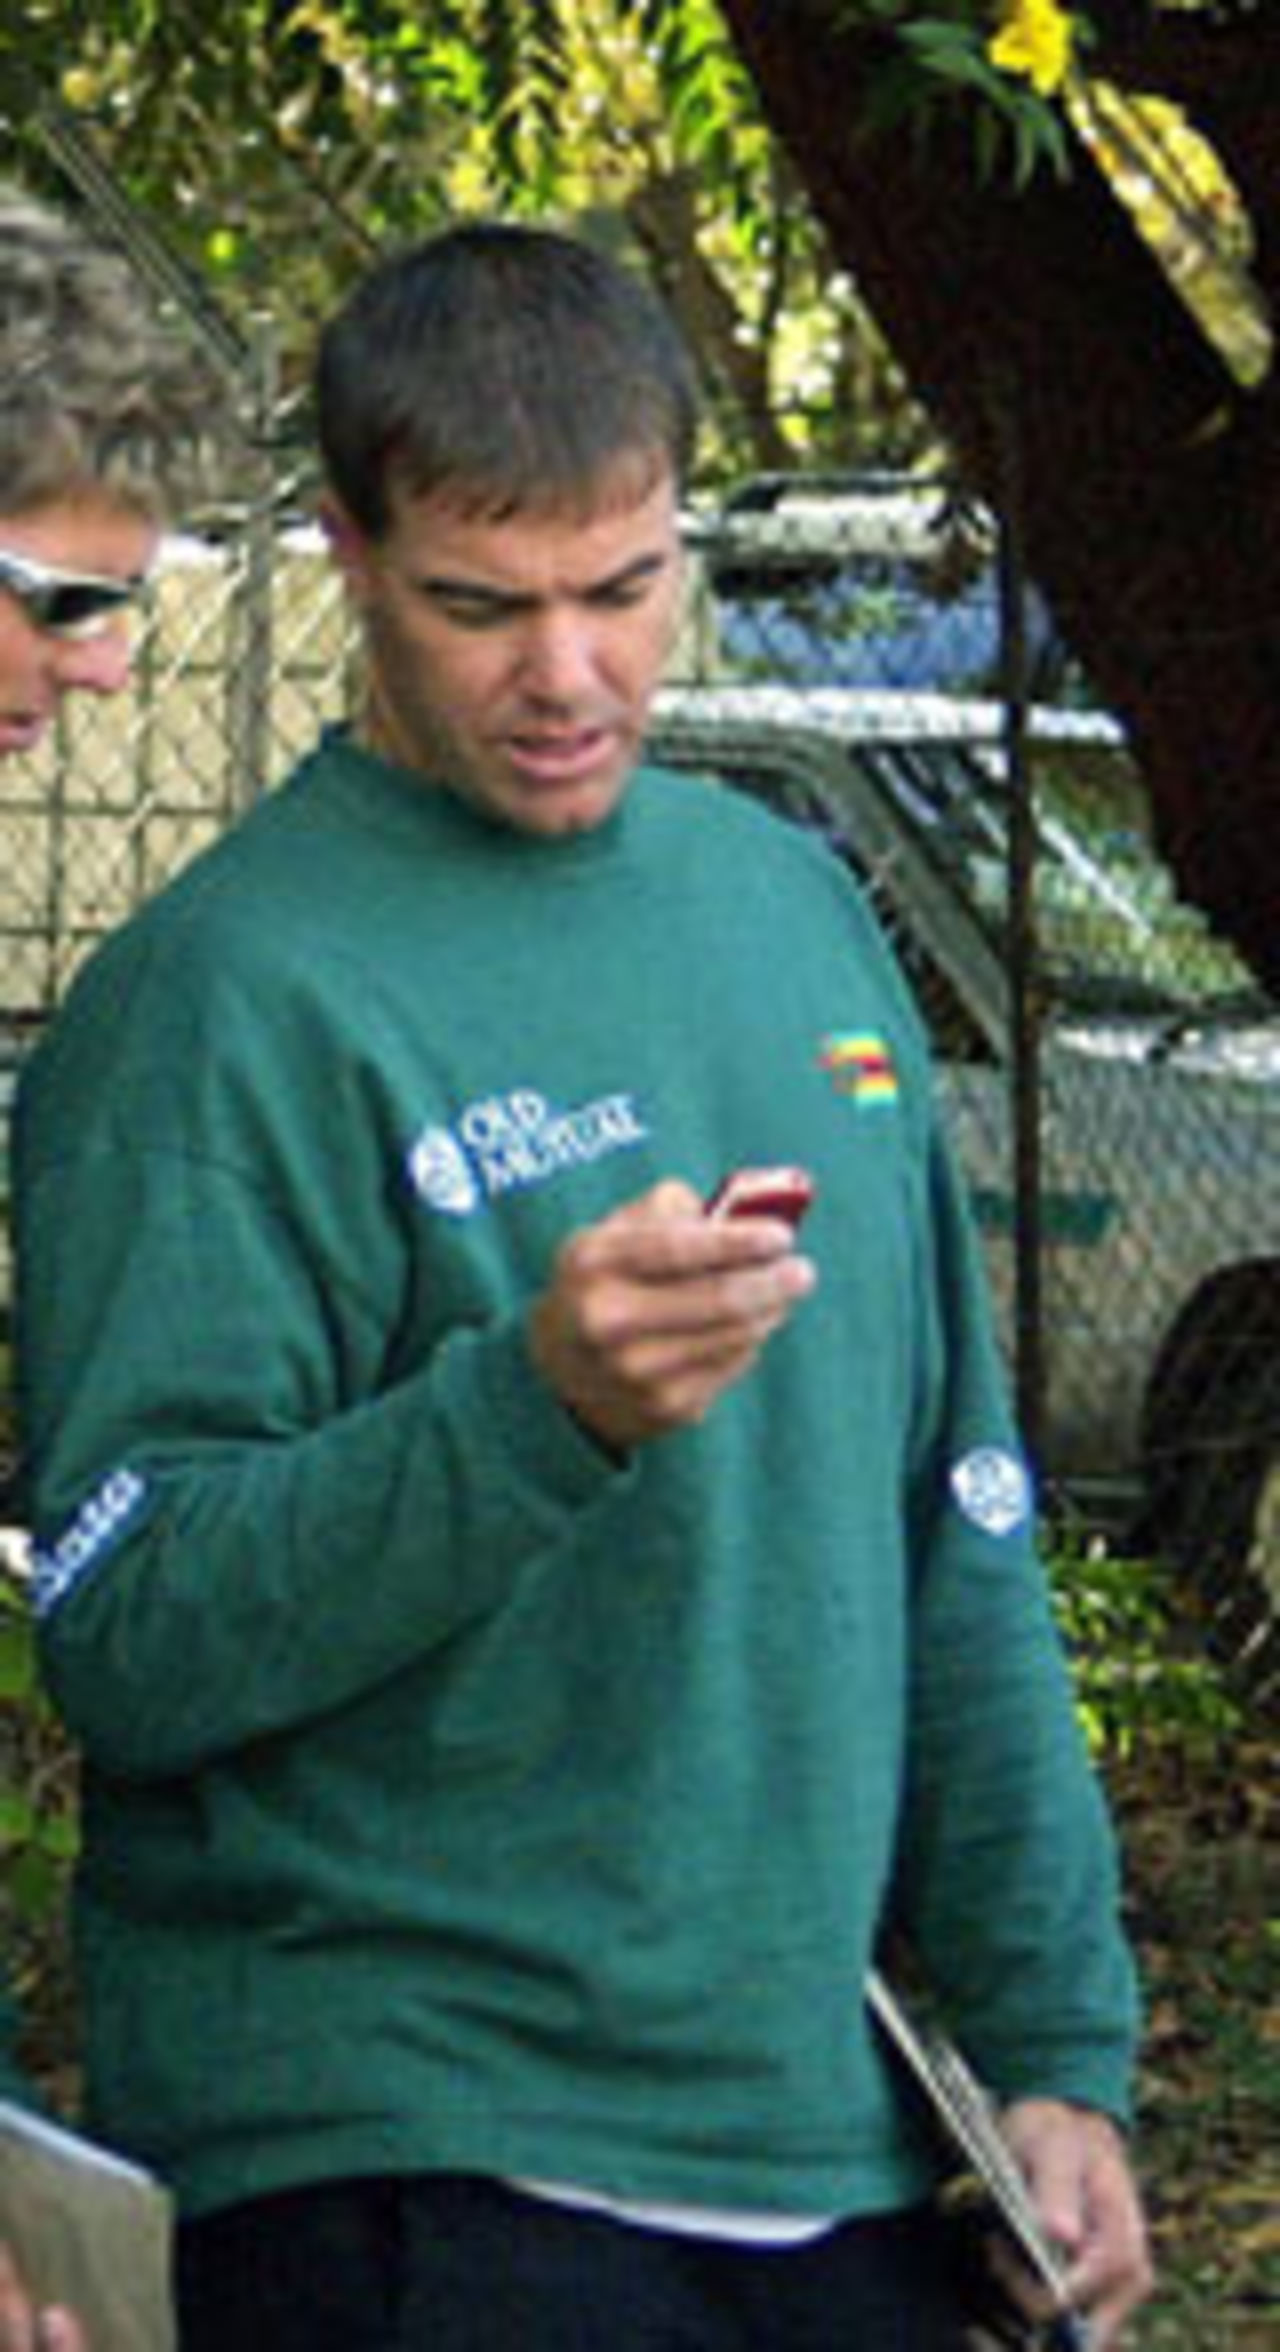 Heath Streak on his mobile phone, Harare, May 20, 2004